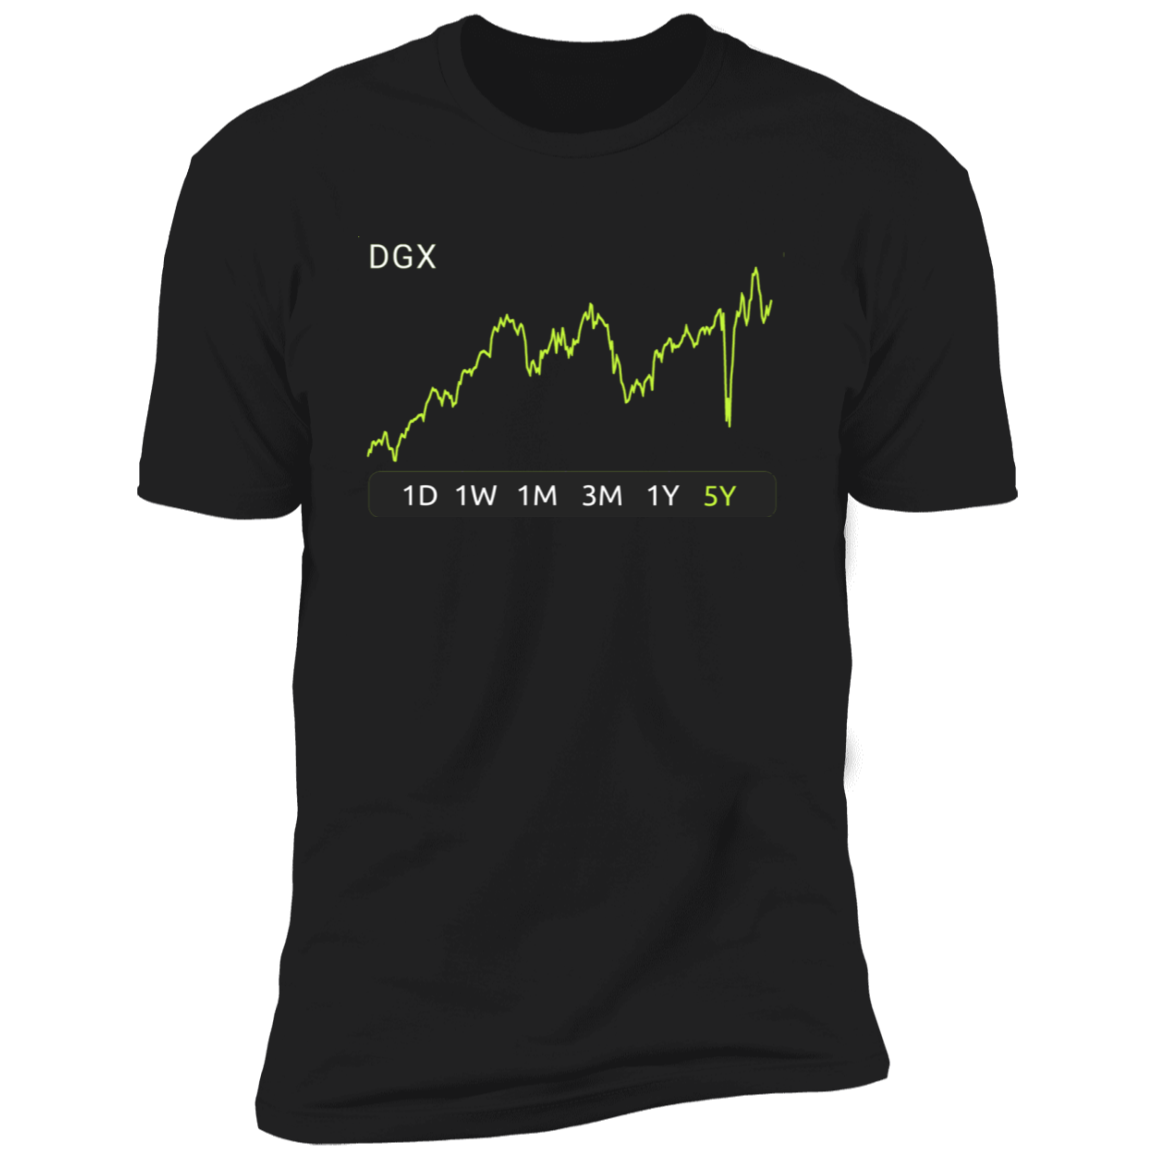 DGX Stock 5y Premium T-Shirt